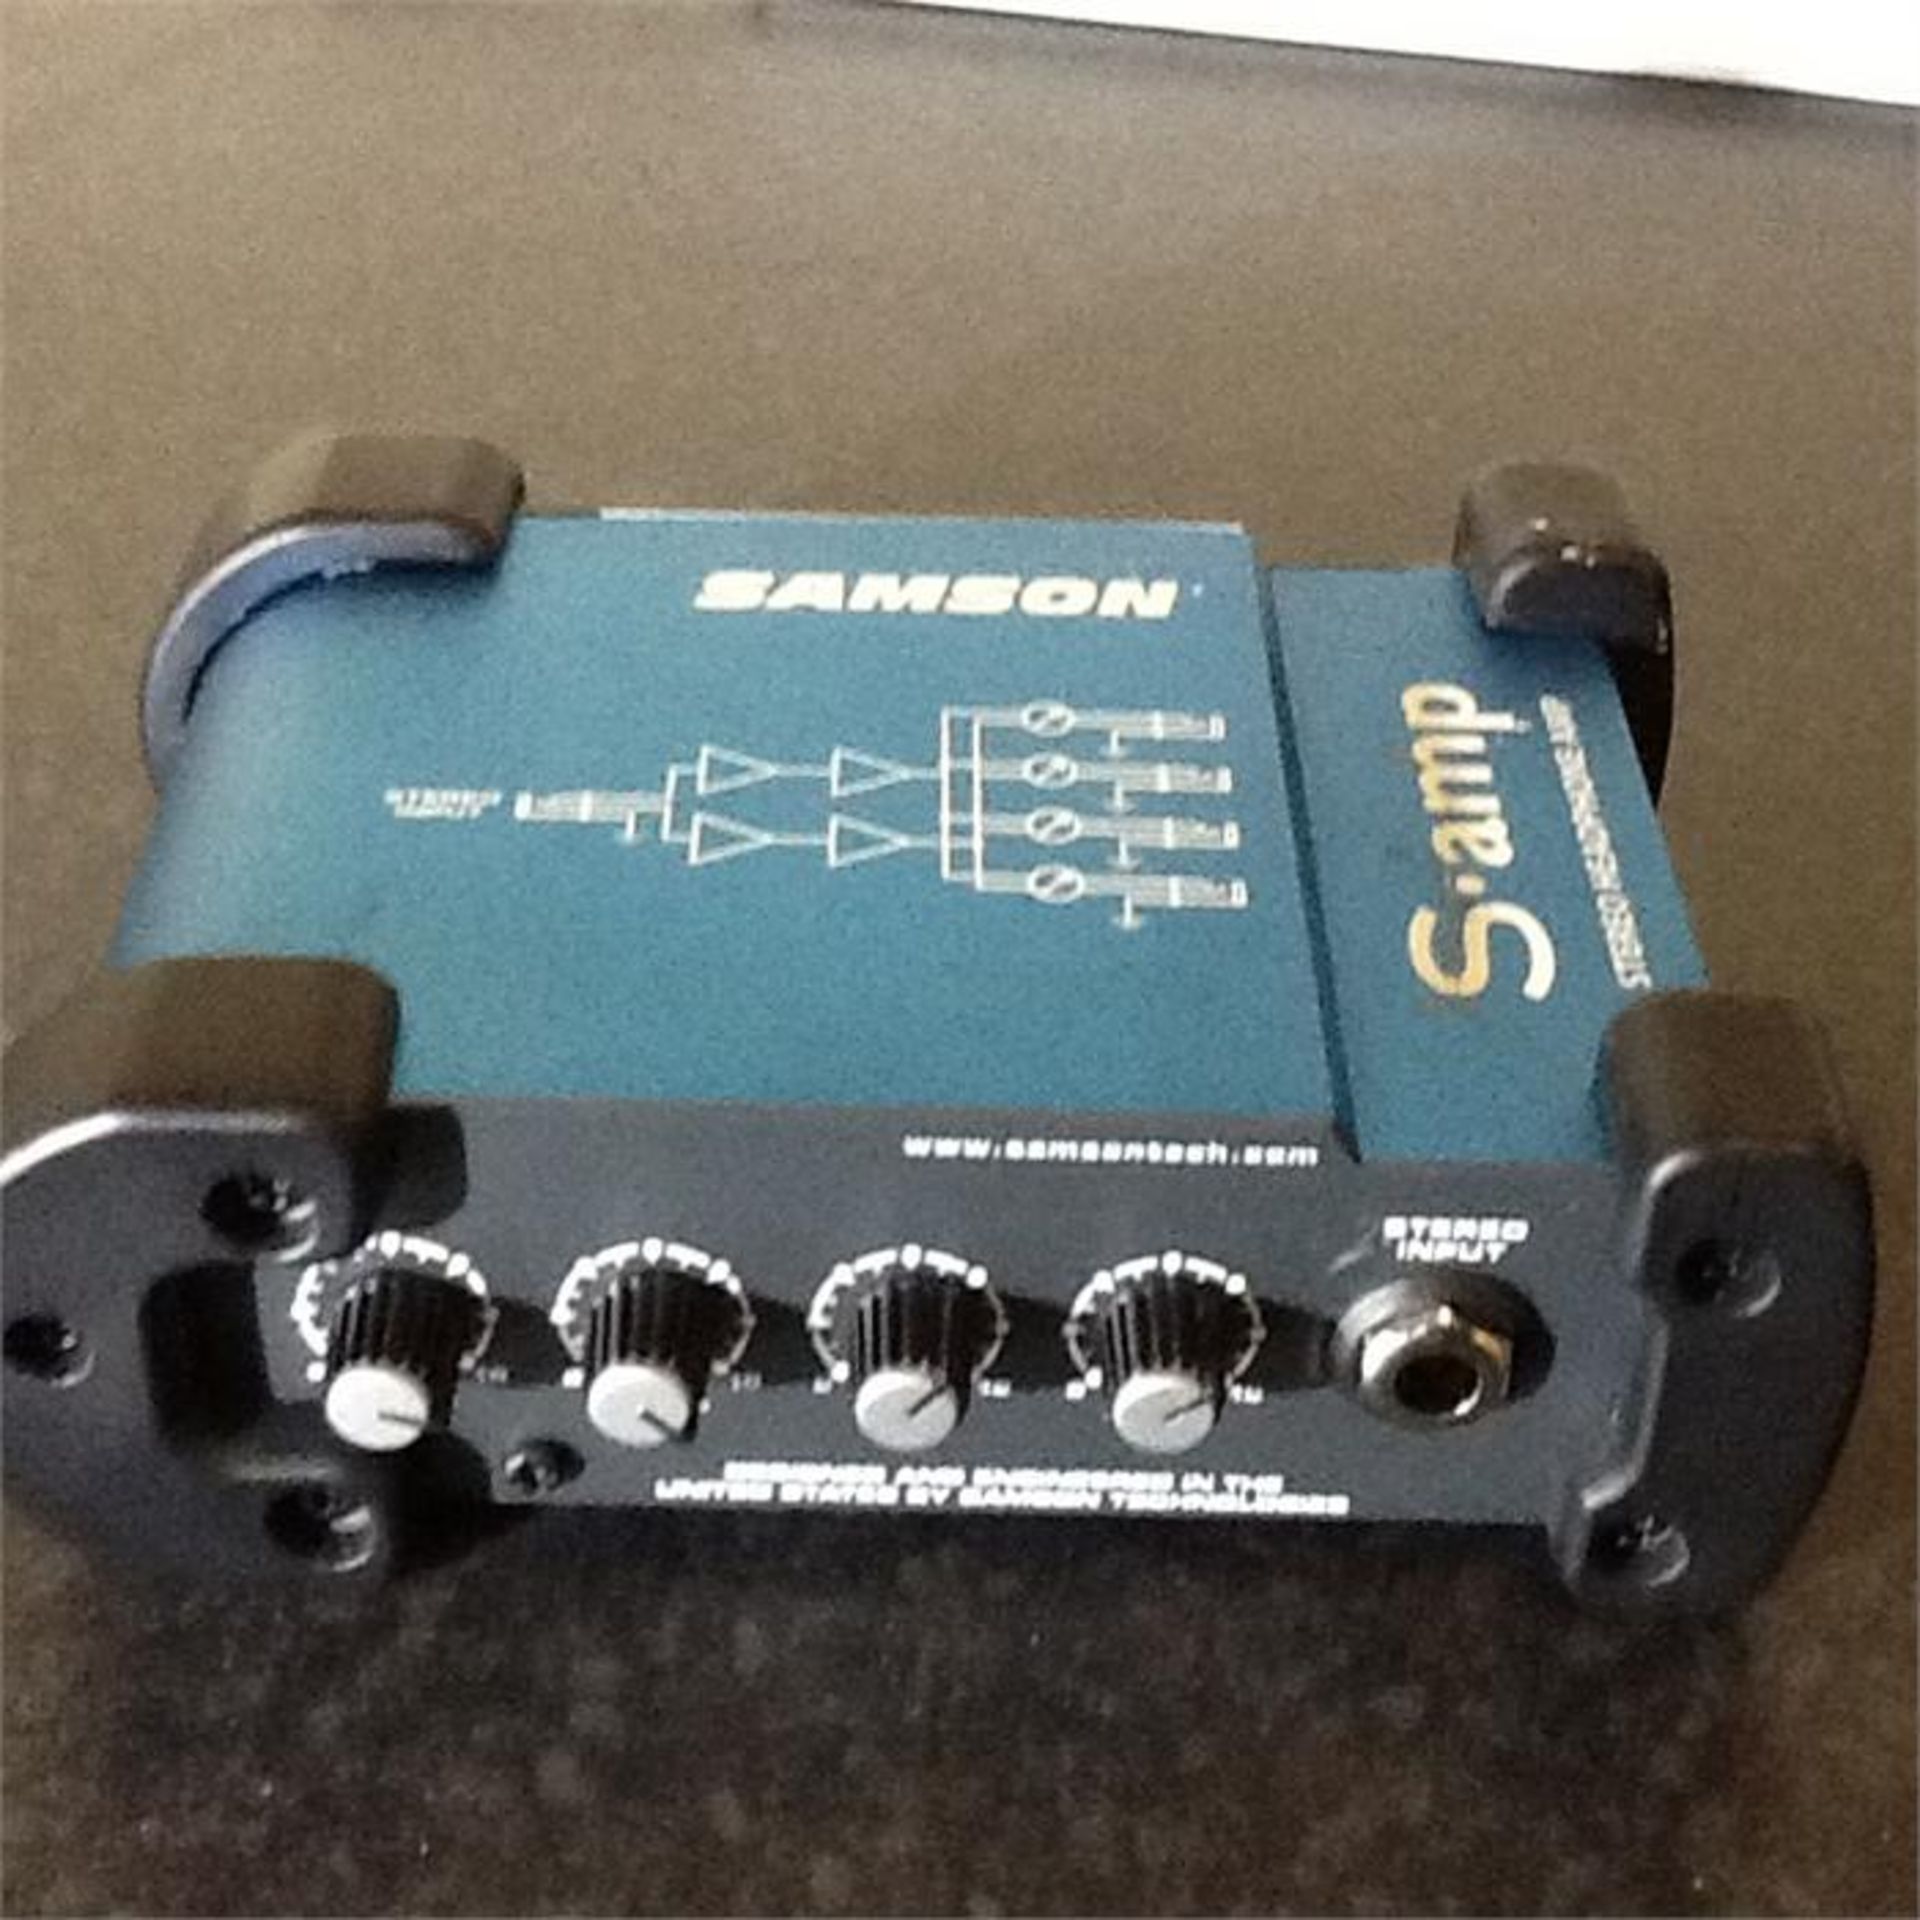 Samson s amp. Headphone amp. No lead - Image 2 of 5